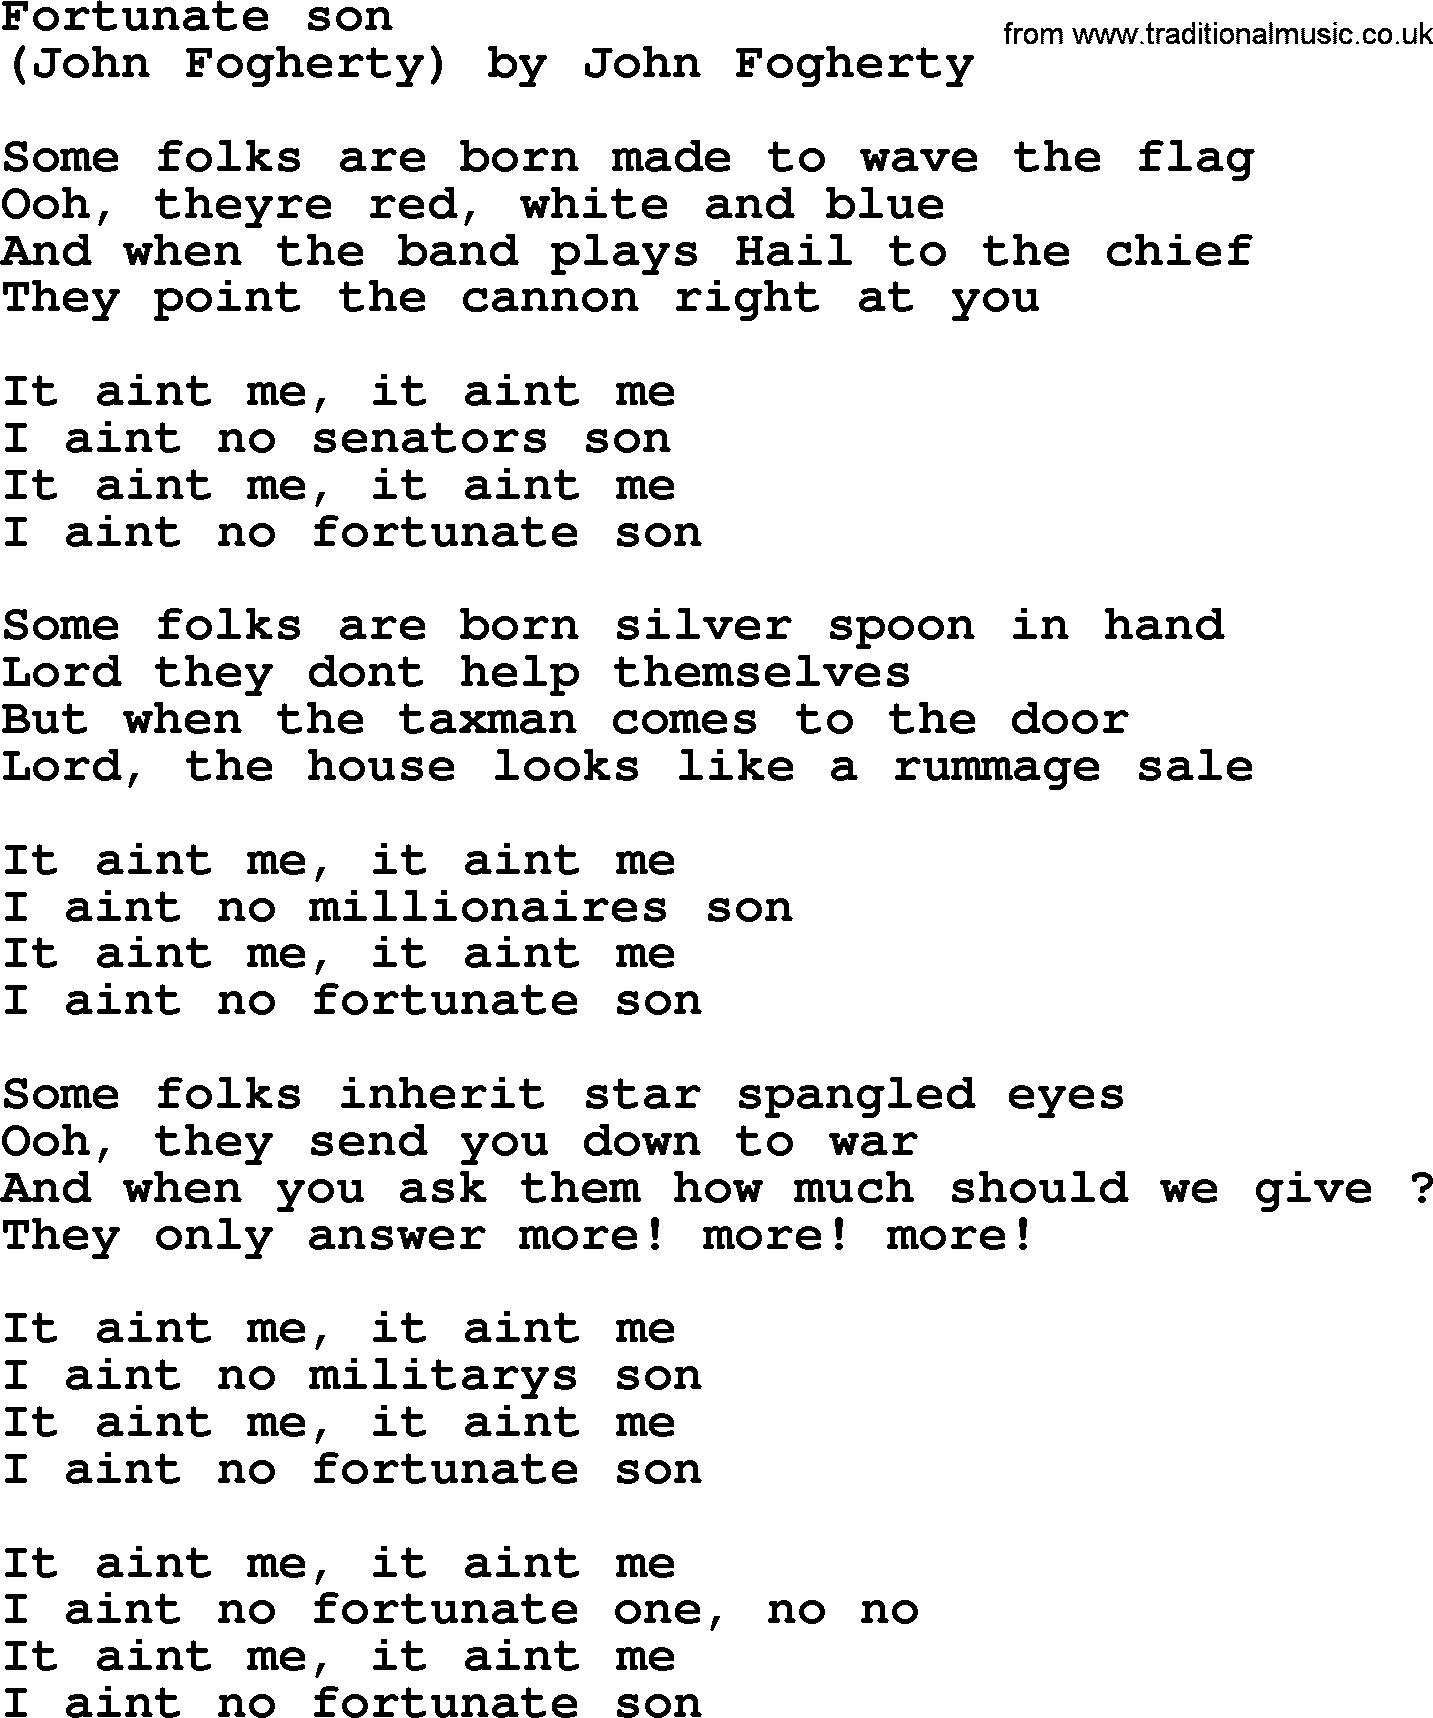 Bruce Springsteen song: Fortunate Son lyrics